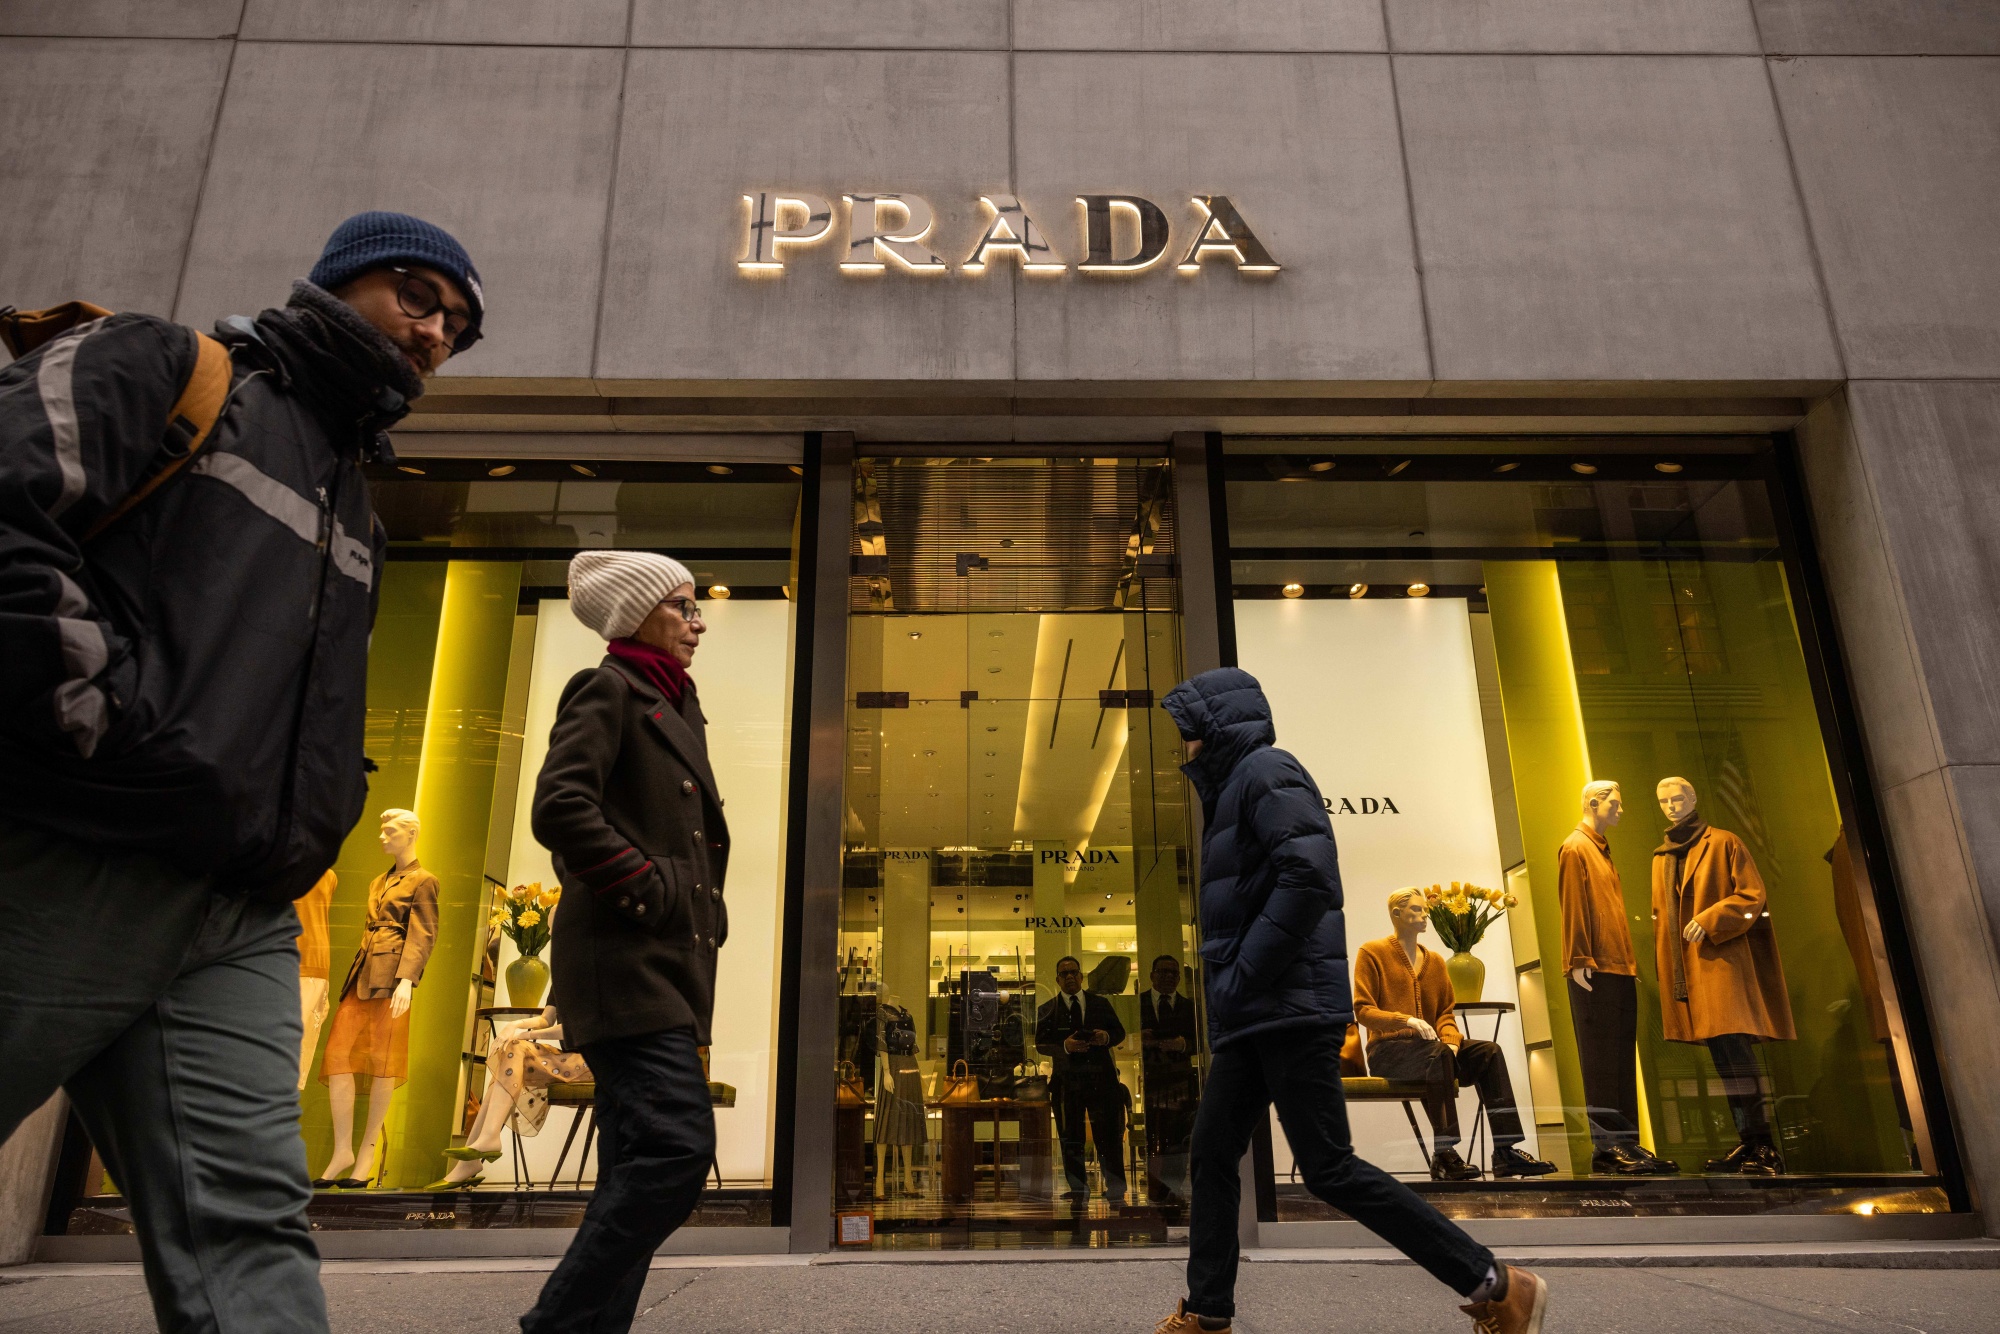 NYC Real Estate: Gucci, Prada Spend Billions on Fifth Avenue